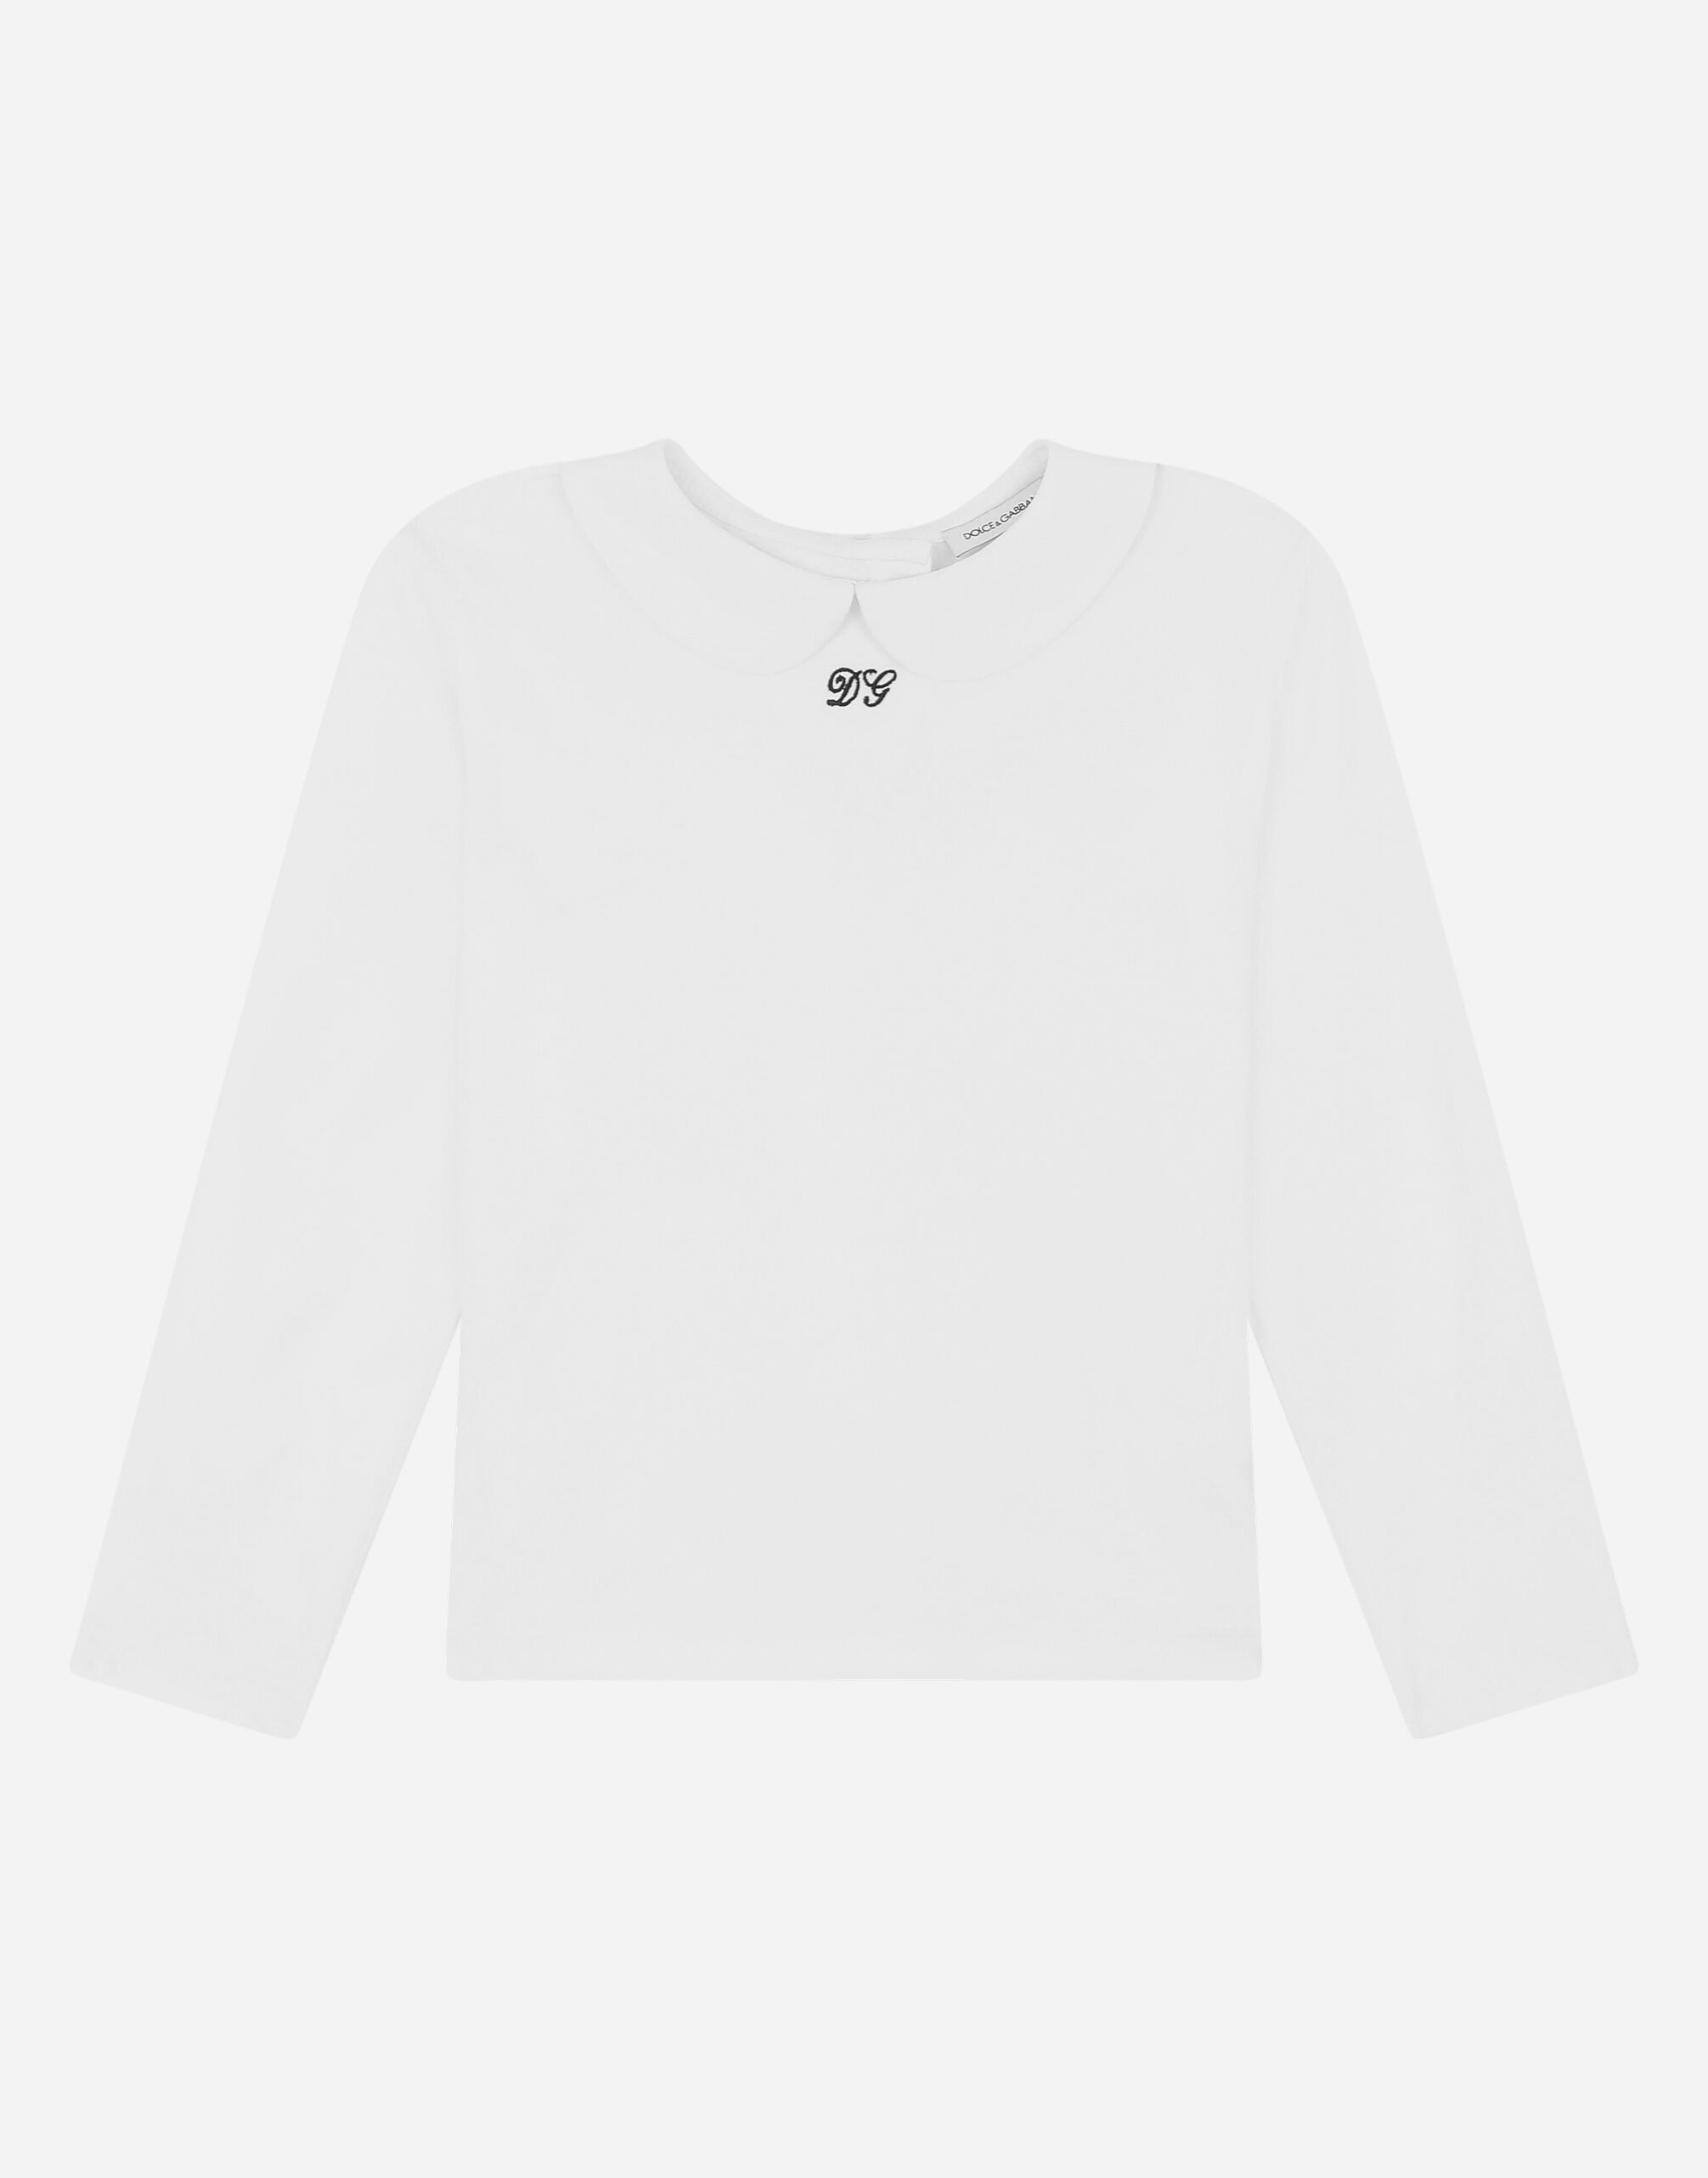 Dolce&Gabbana Jersey T-shirt with DG embroidery White L5JTJQG7J6Q